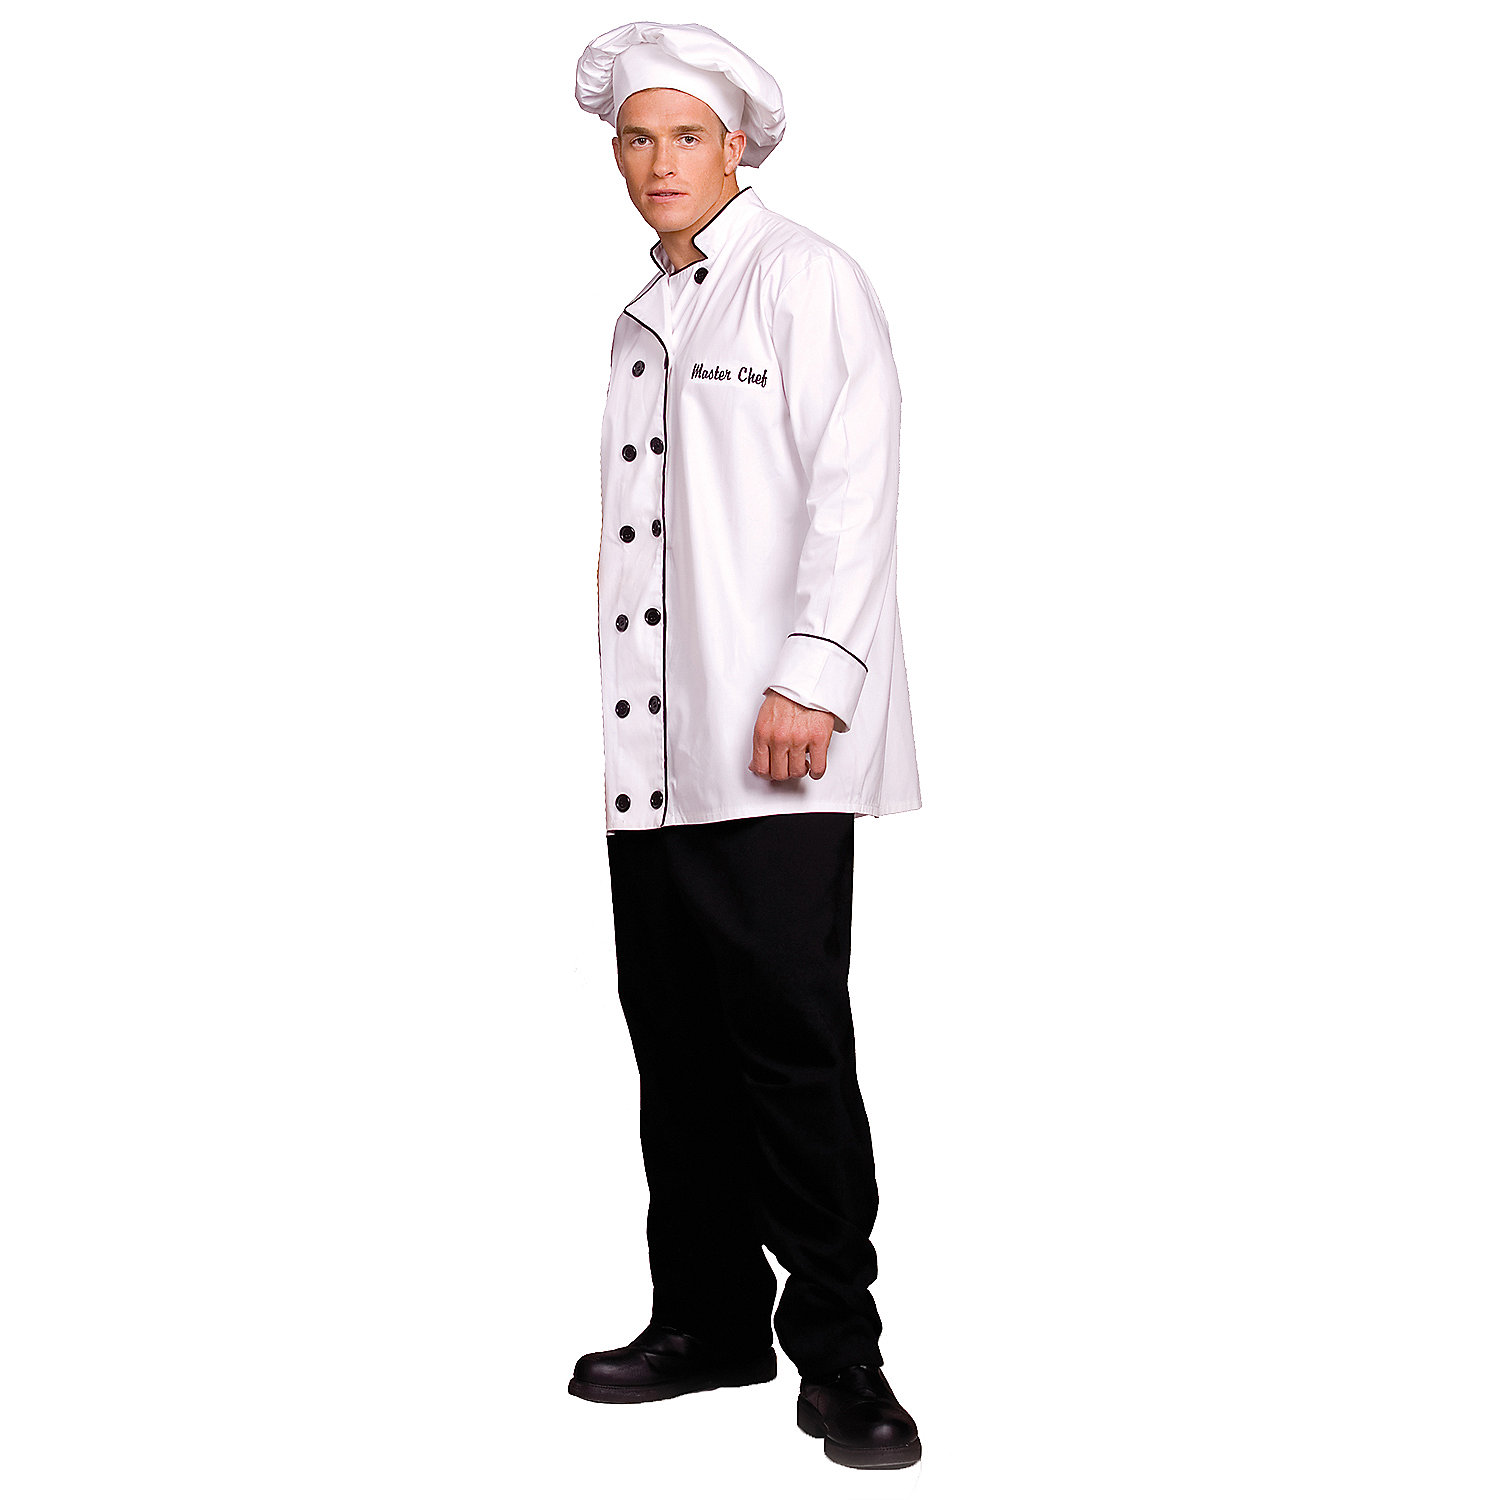 Underwraps Men's Master Chef Costume - One Size - image 1 of 2